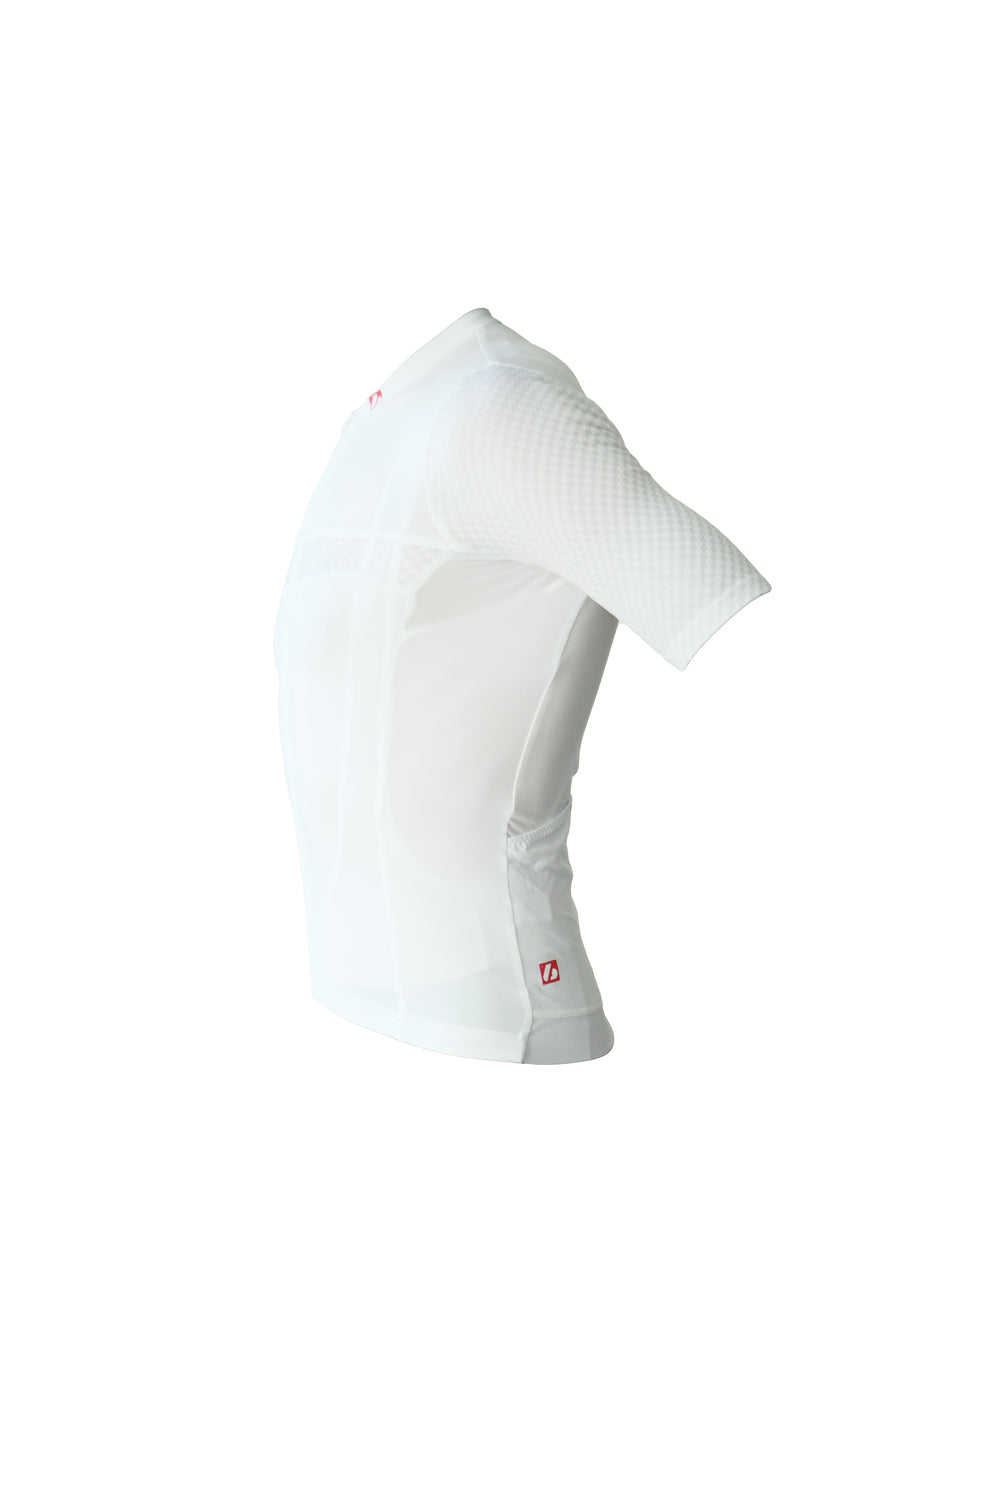 Bike textile - Short sleeved jersey, white